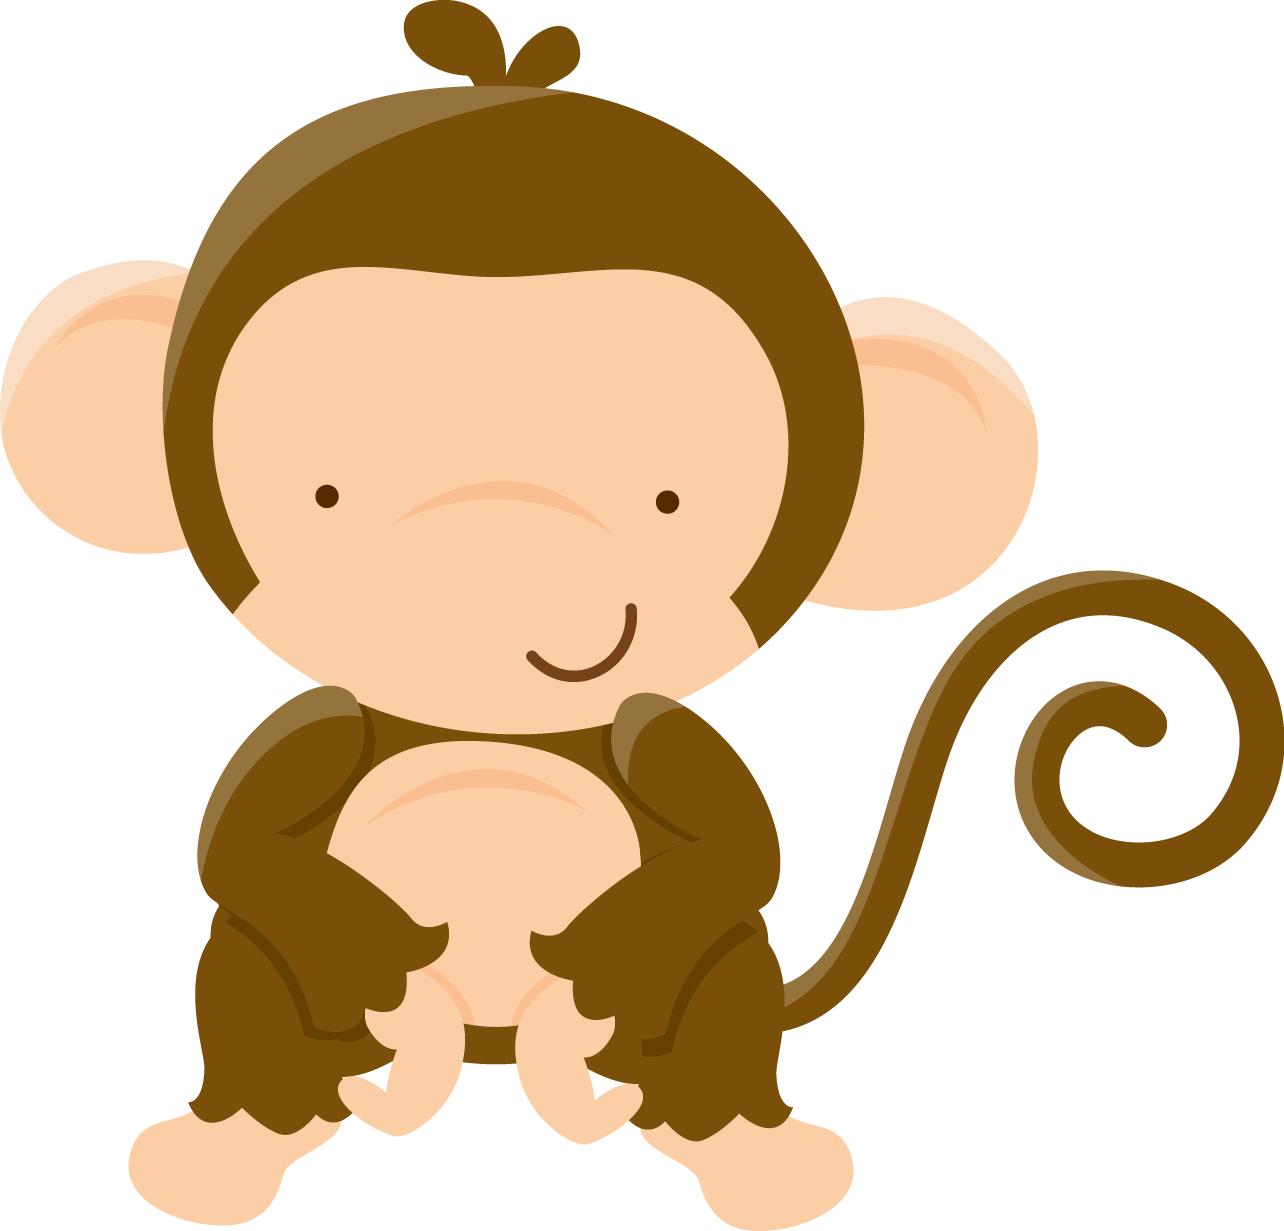 View All Images At Alpha Folder - 1st Birthday Monkey Personalized Bib (1284x1231)